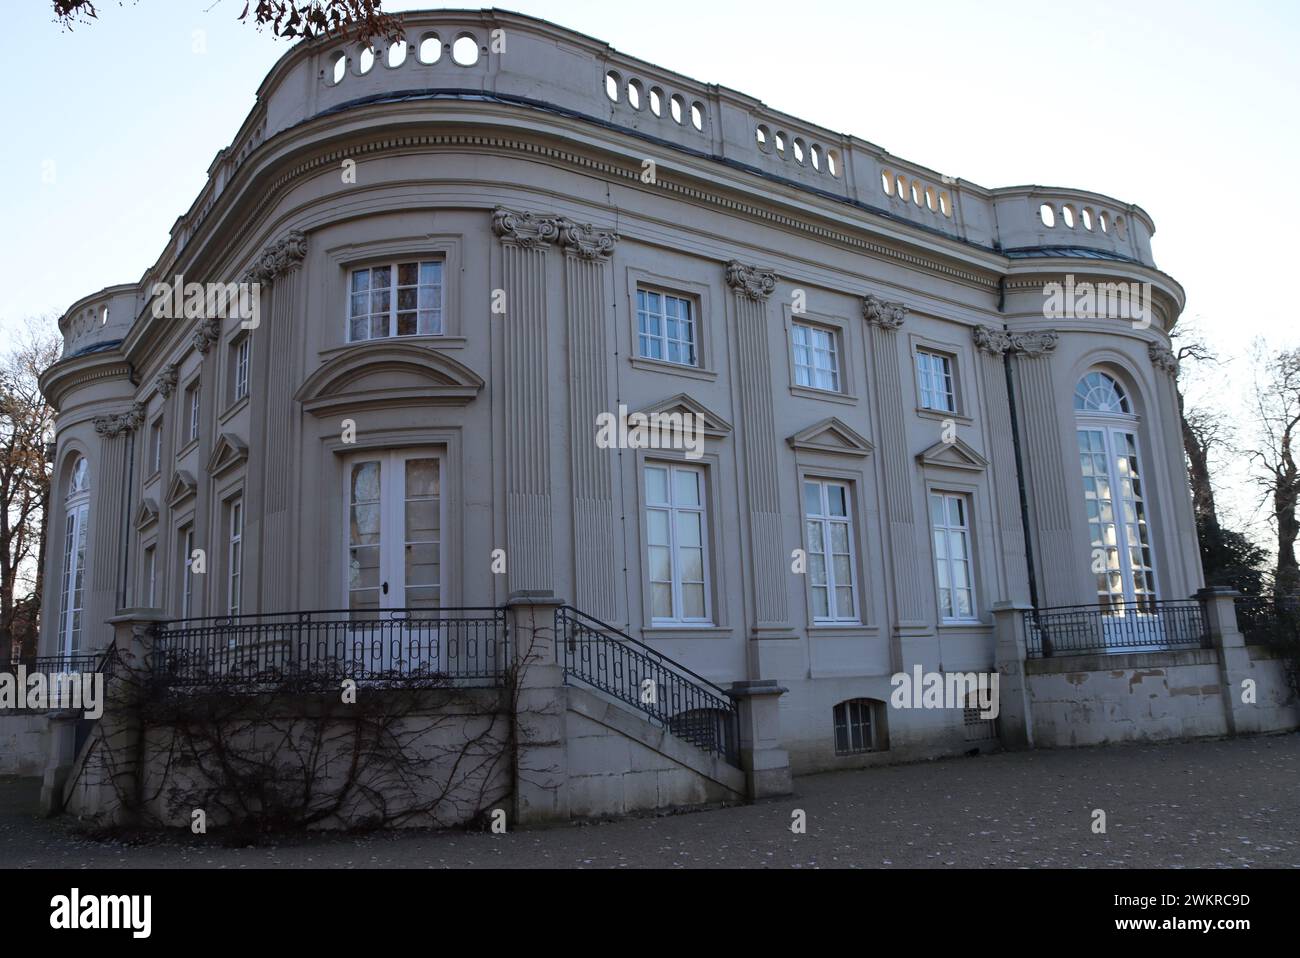 Schloss Richmond in Braunschweig, Germany Stock Photo